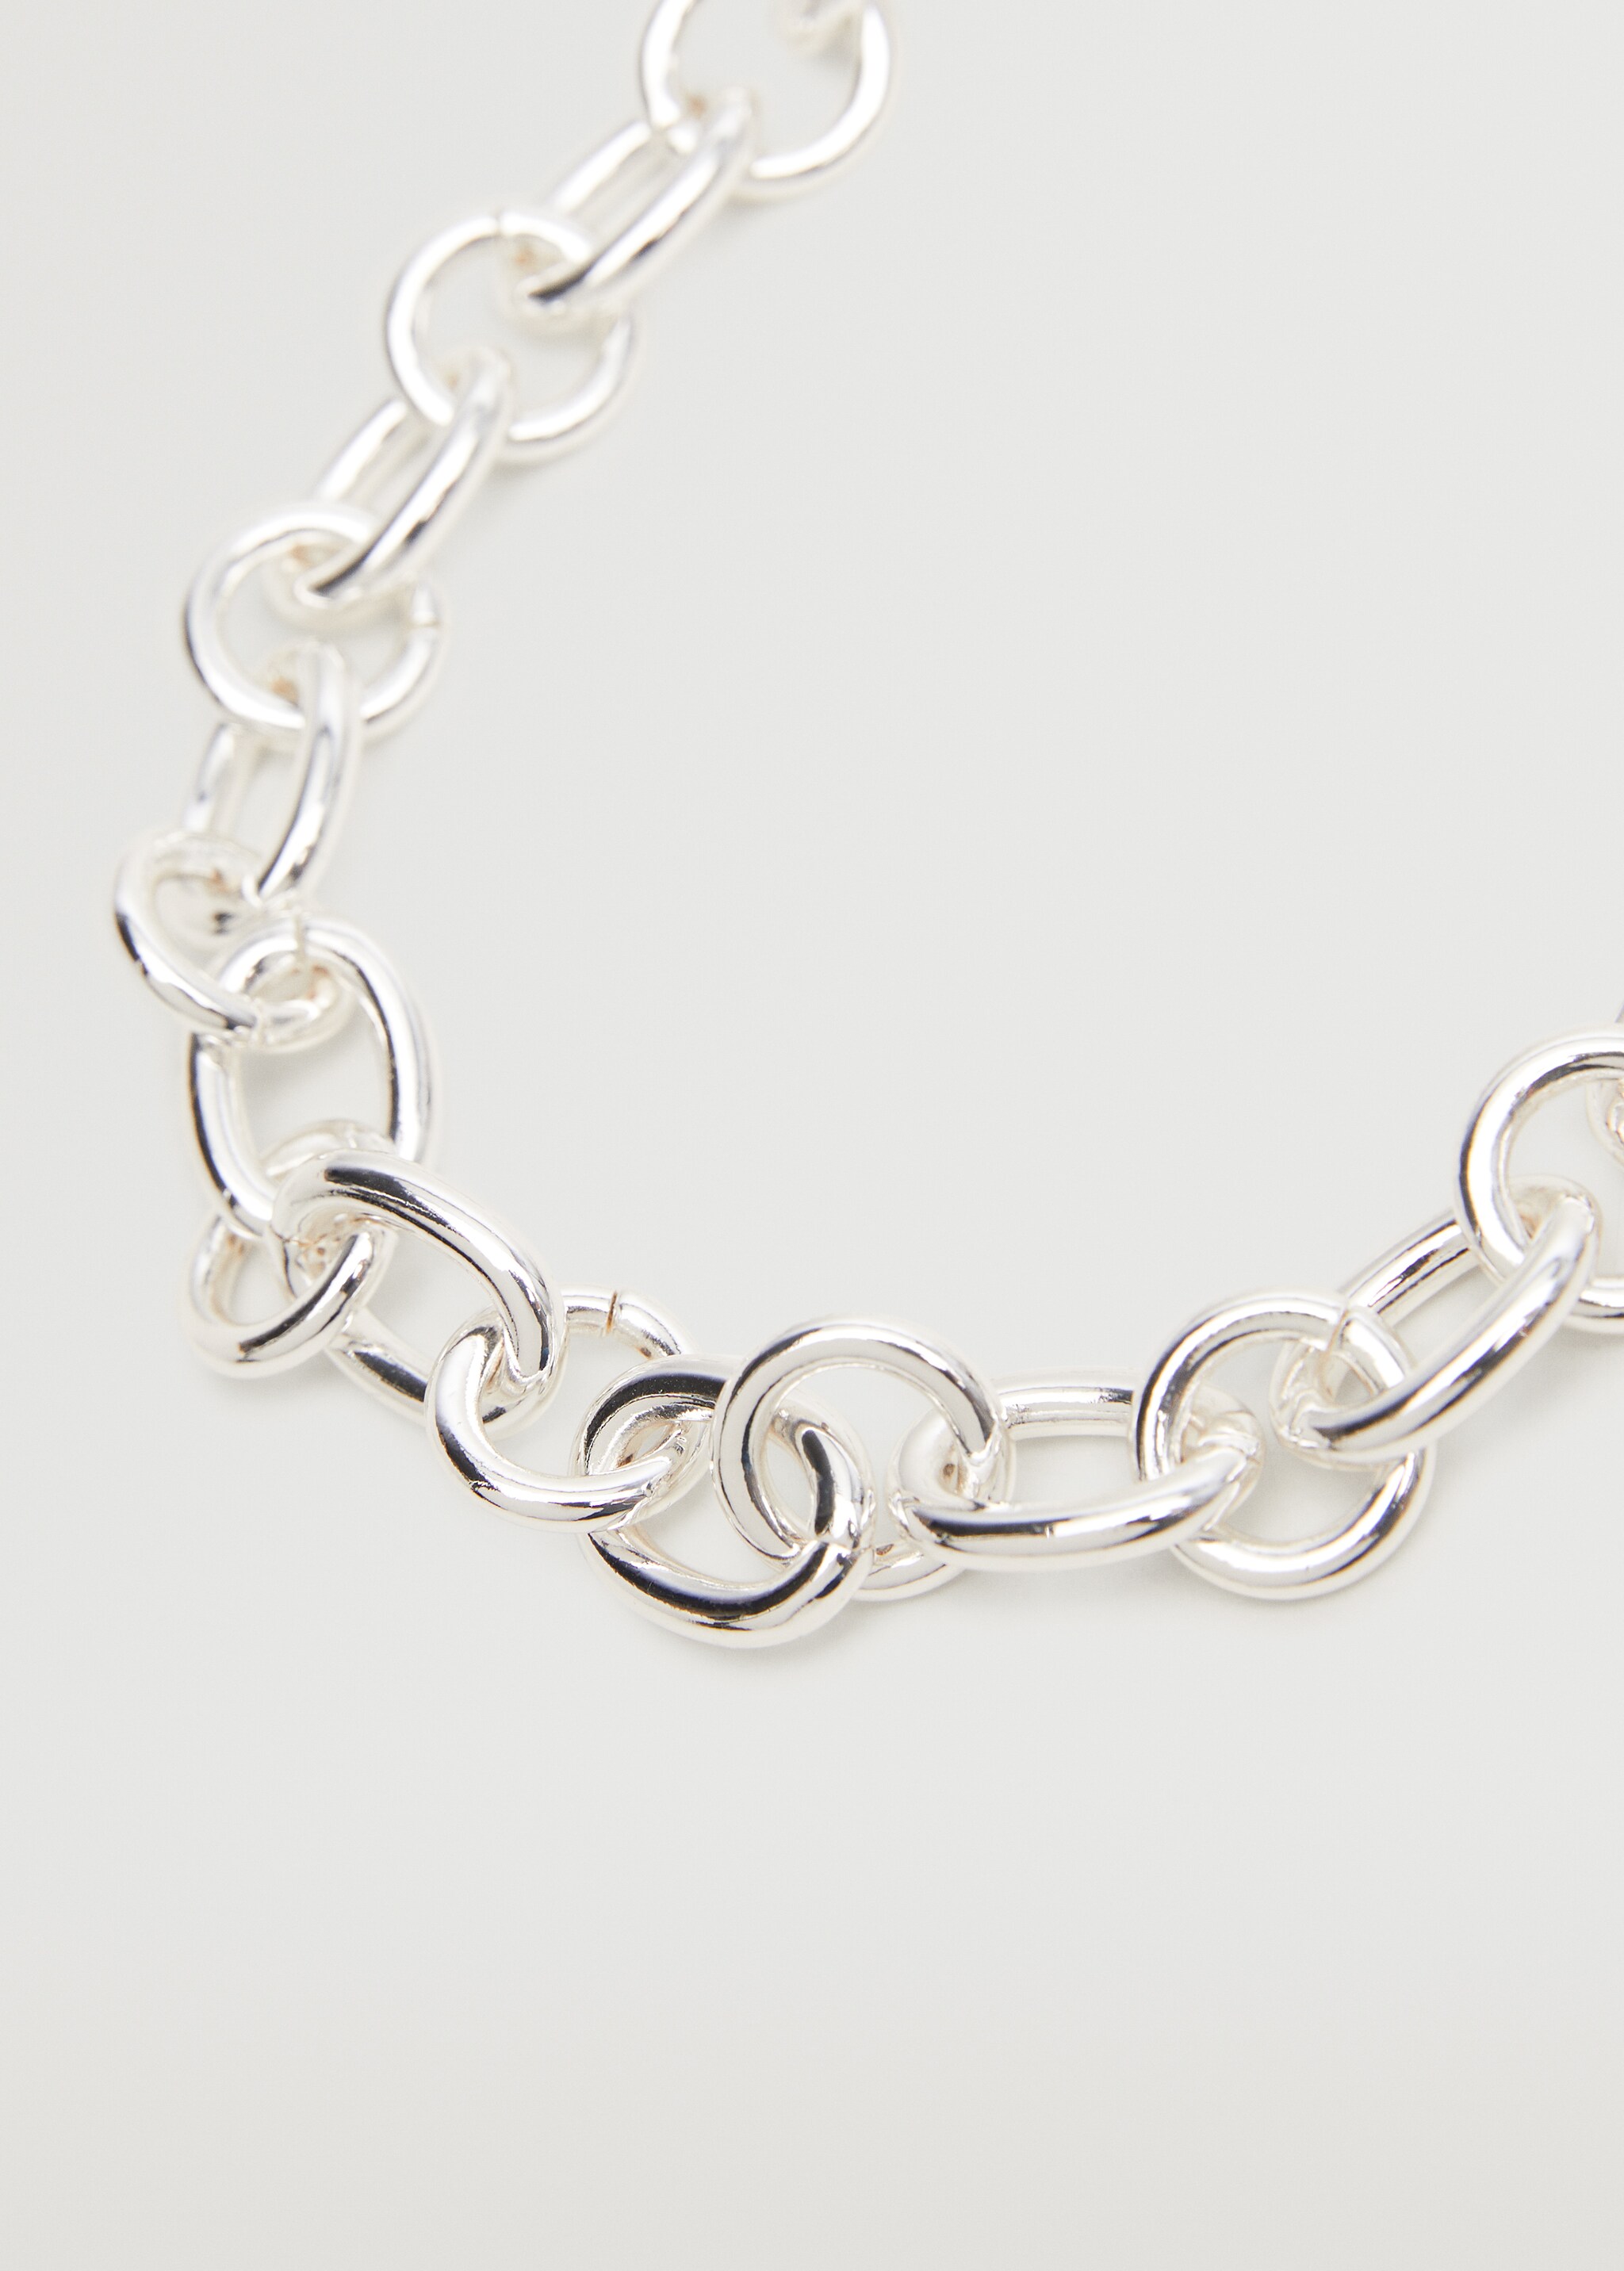 Bead chain necklace - Medium plane